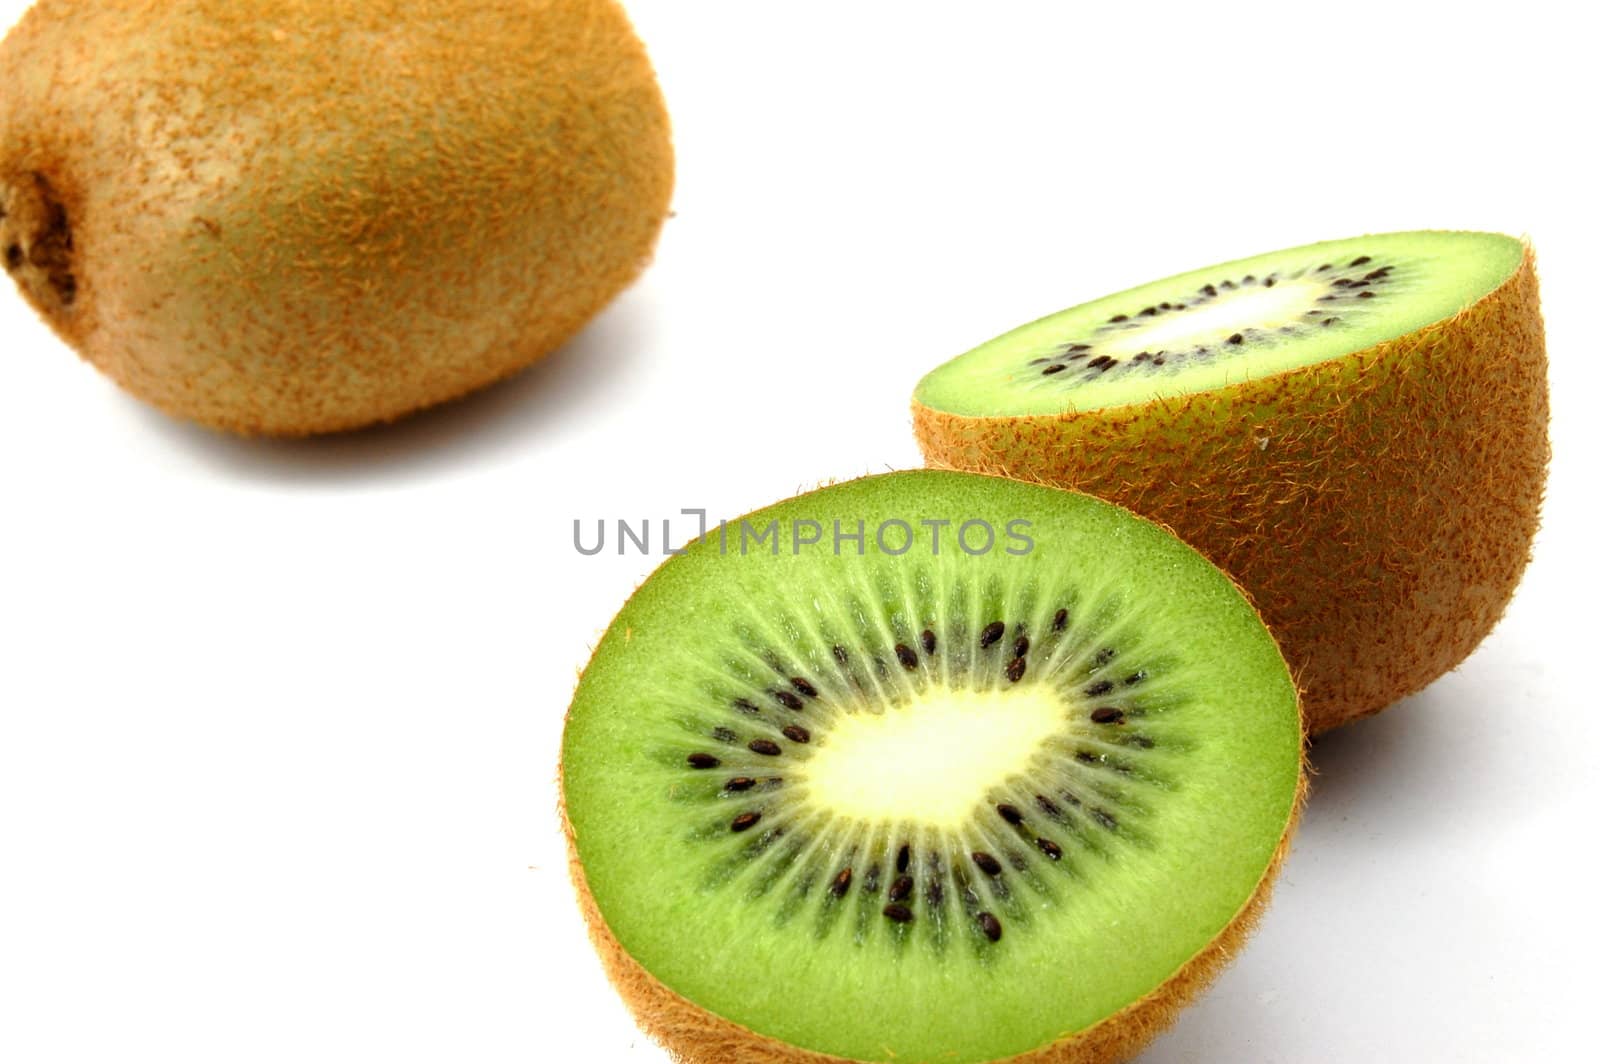 kiwi fruit isolated on white background by gunnar3000